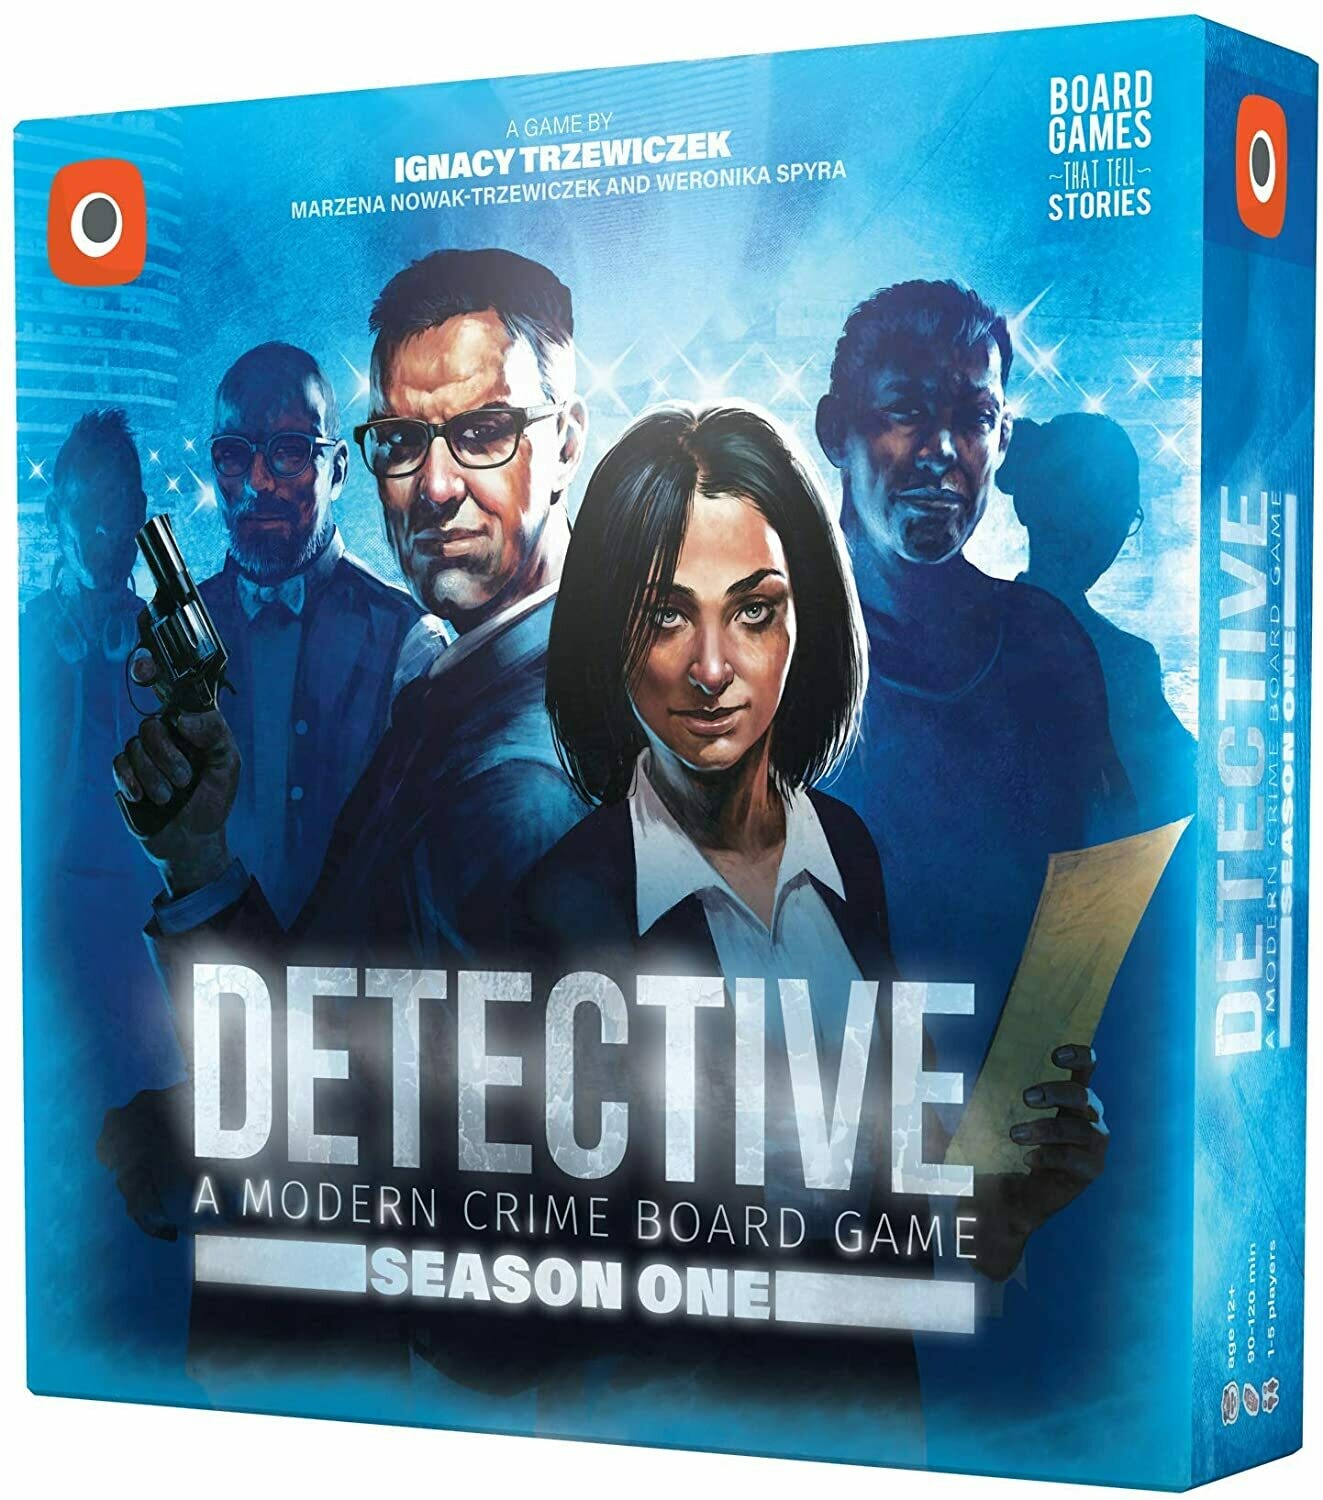 Detective: A Modern Crime Board Game - Season One